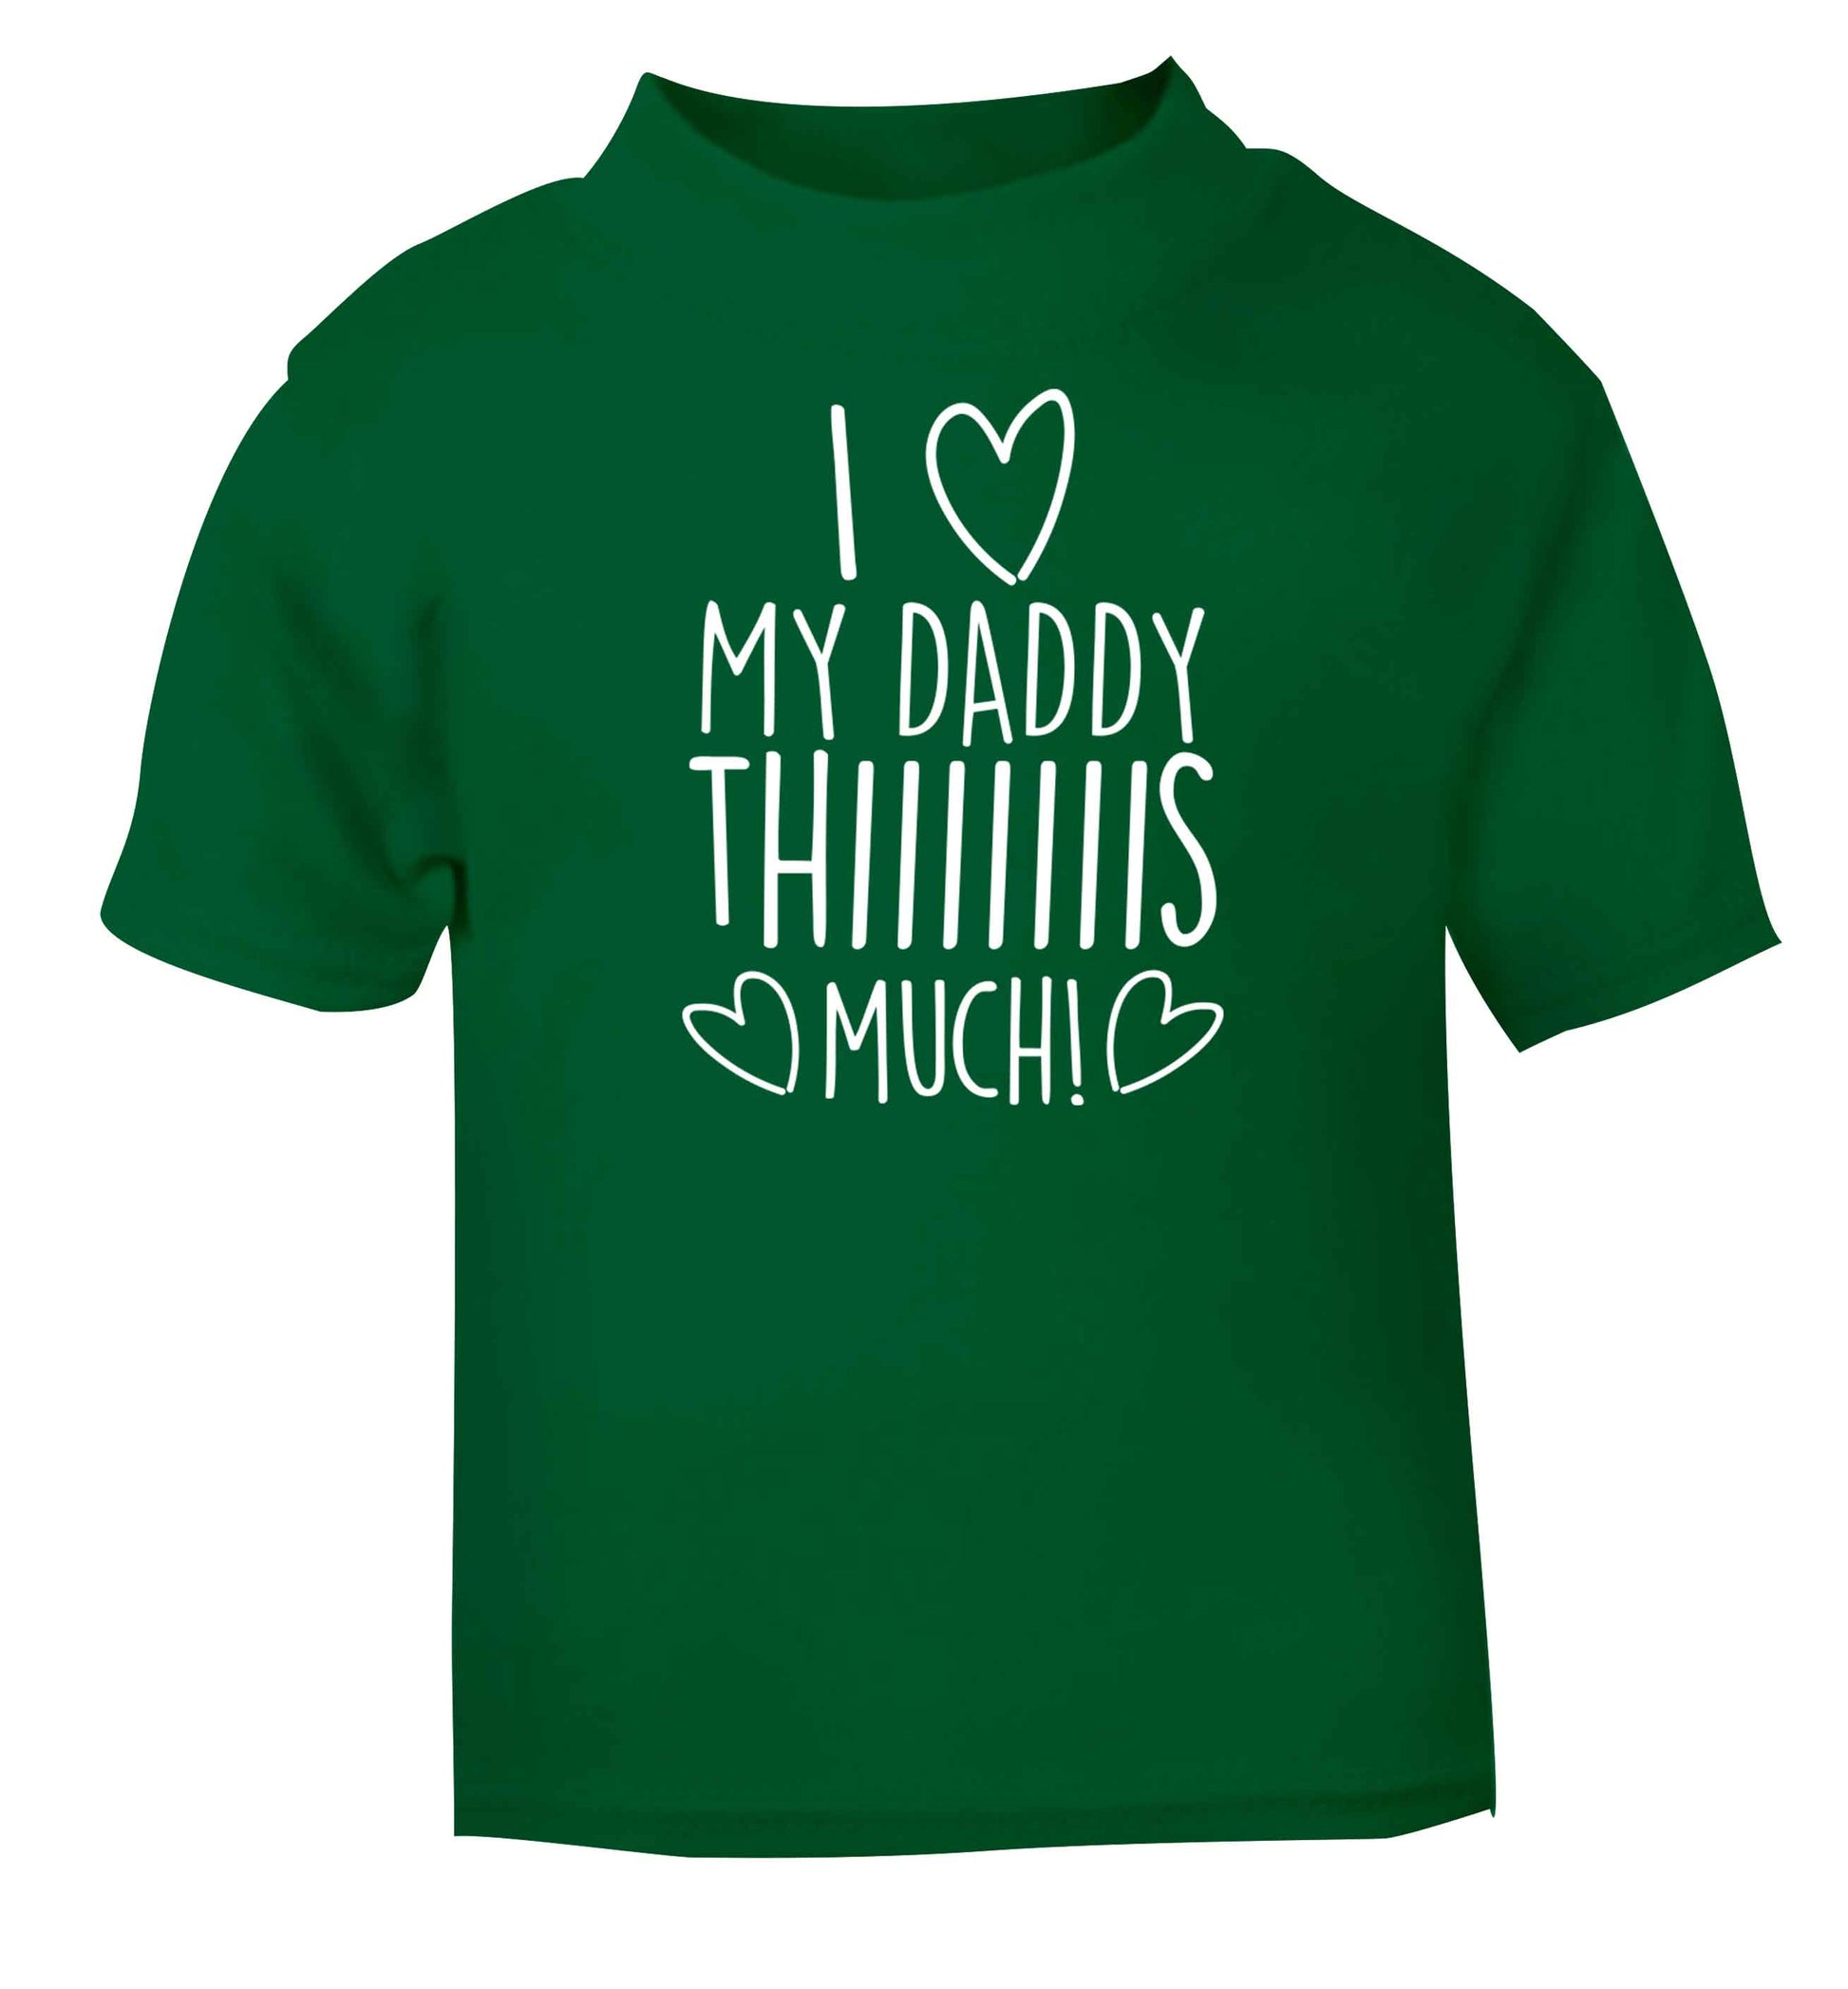 I love my daddy thiiiiis much! green baby toddler Tshirt 2 Years